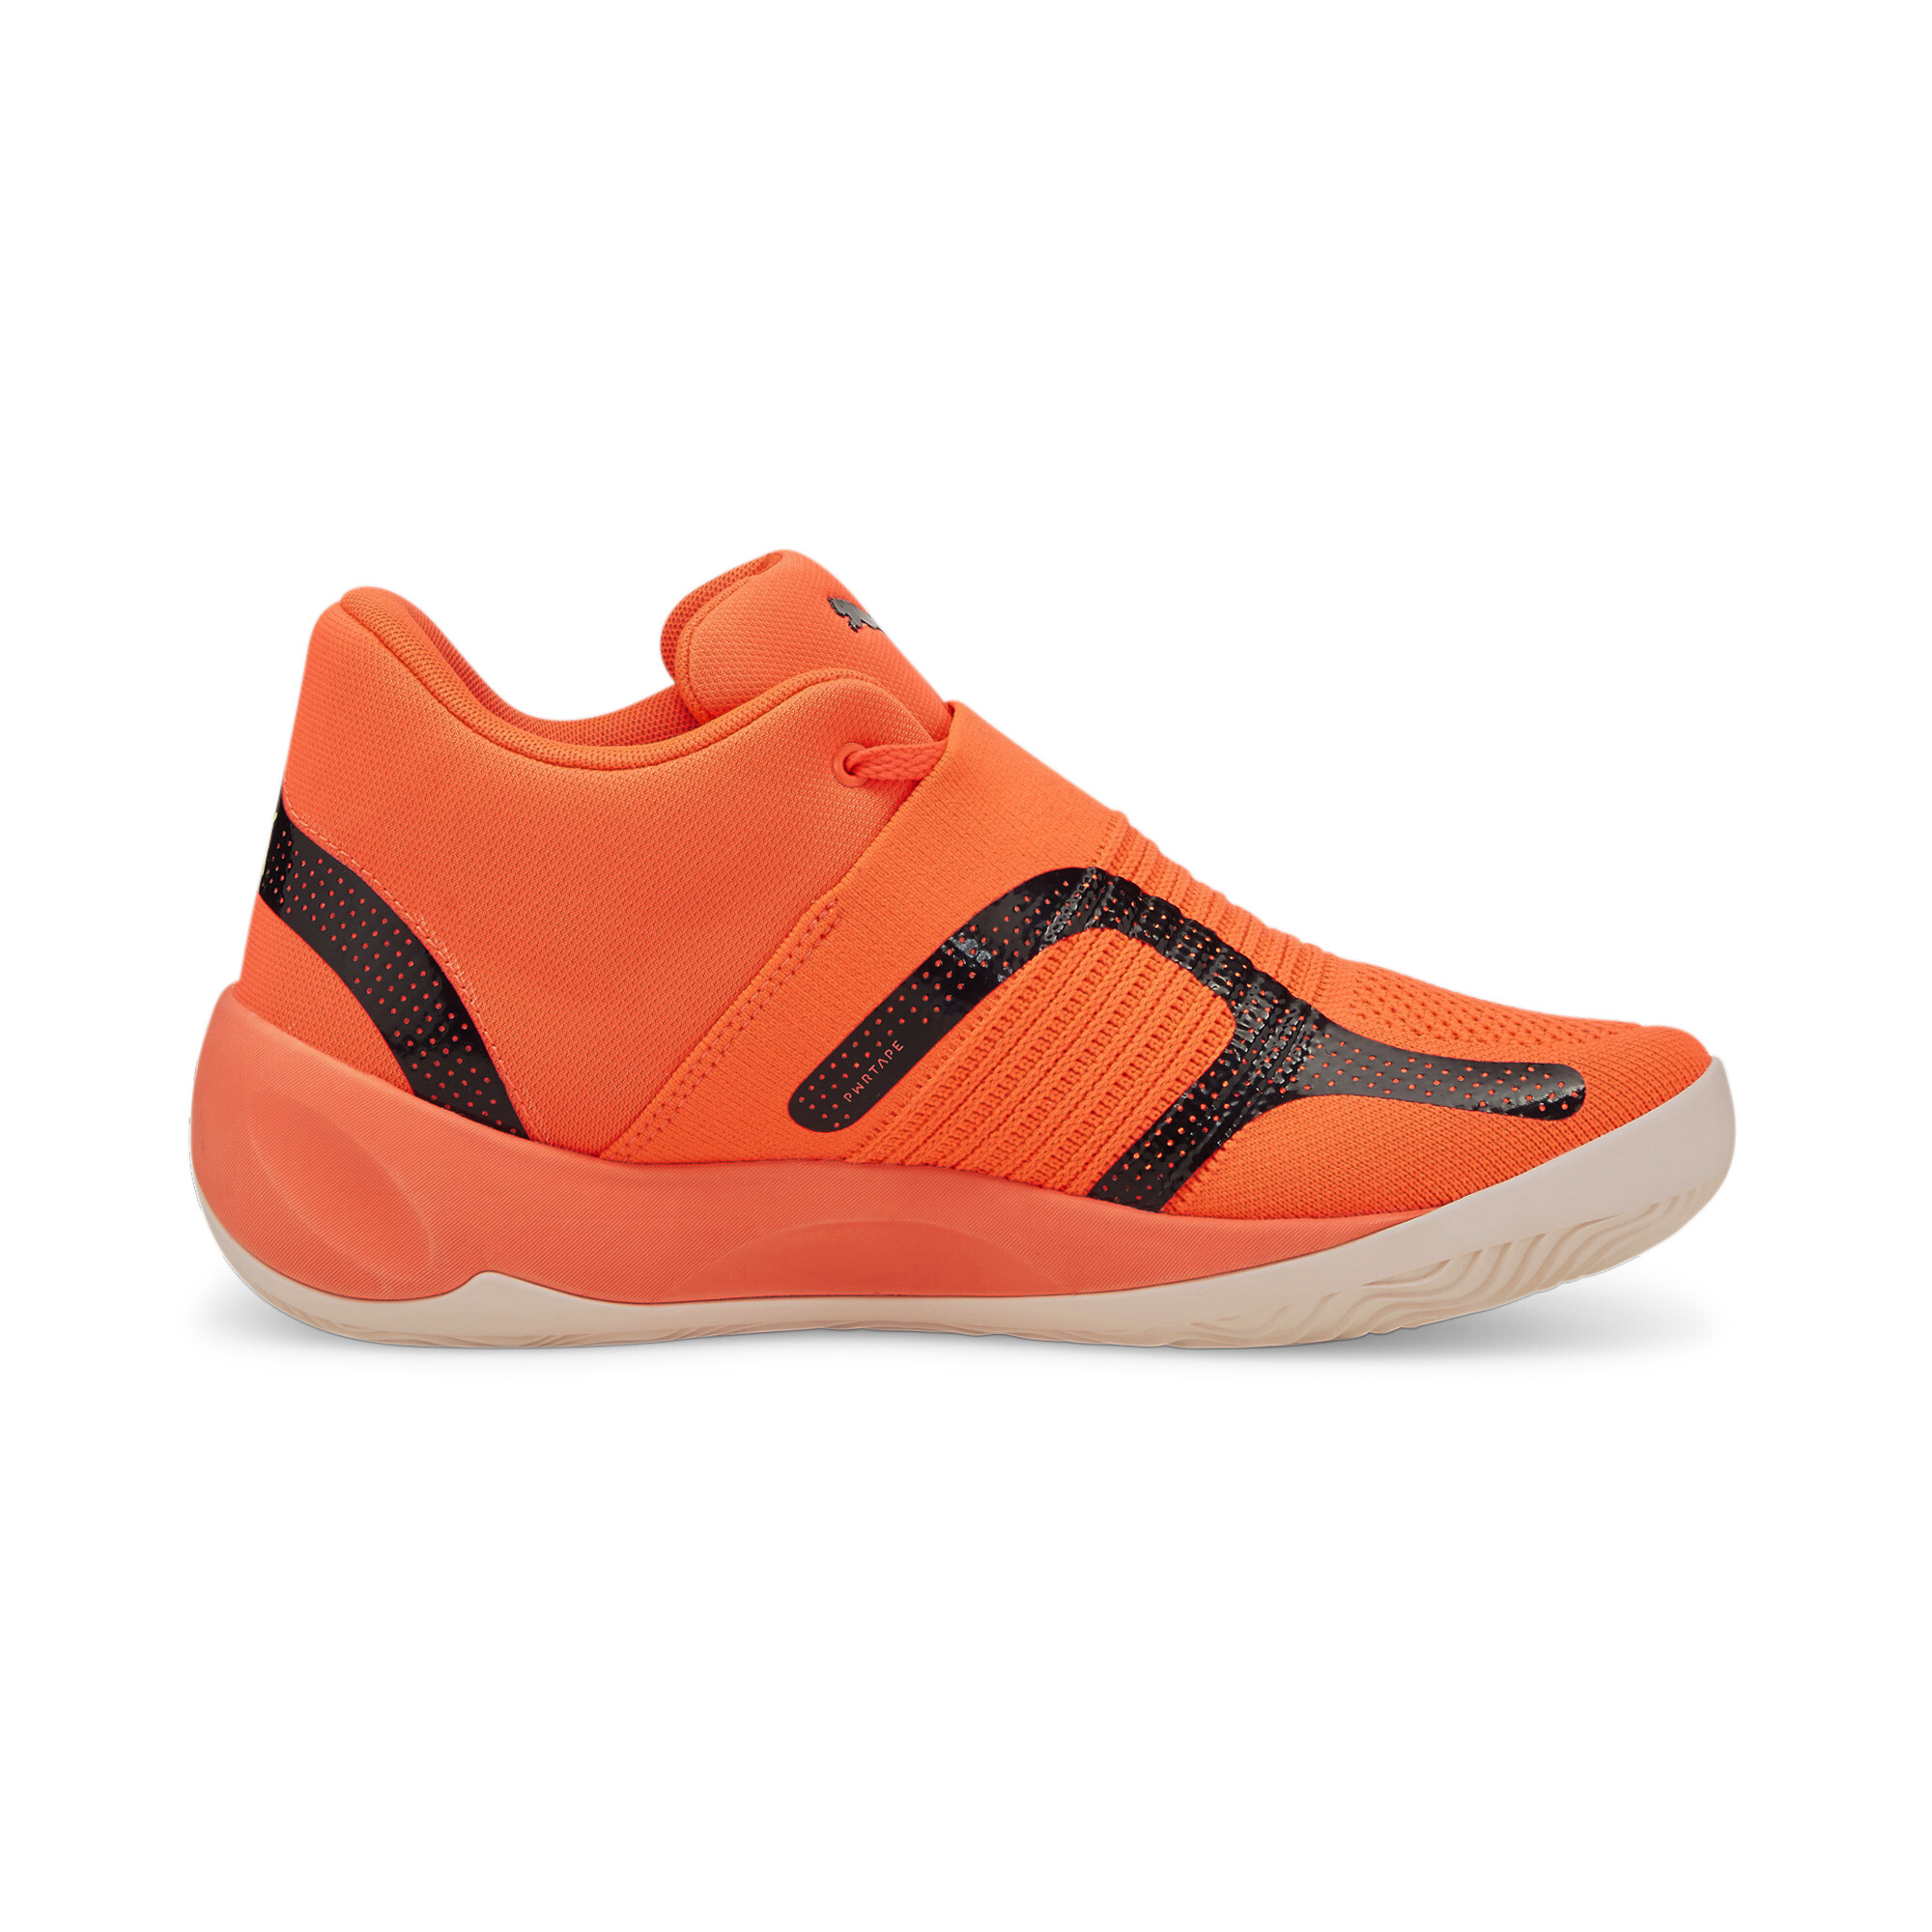 Men's PUMA Rise NITRO Basketball Shoes In Orange, Size EU 43